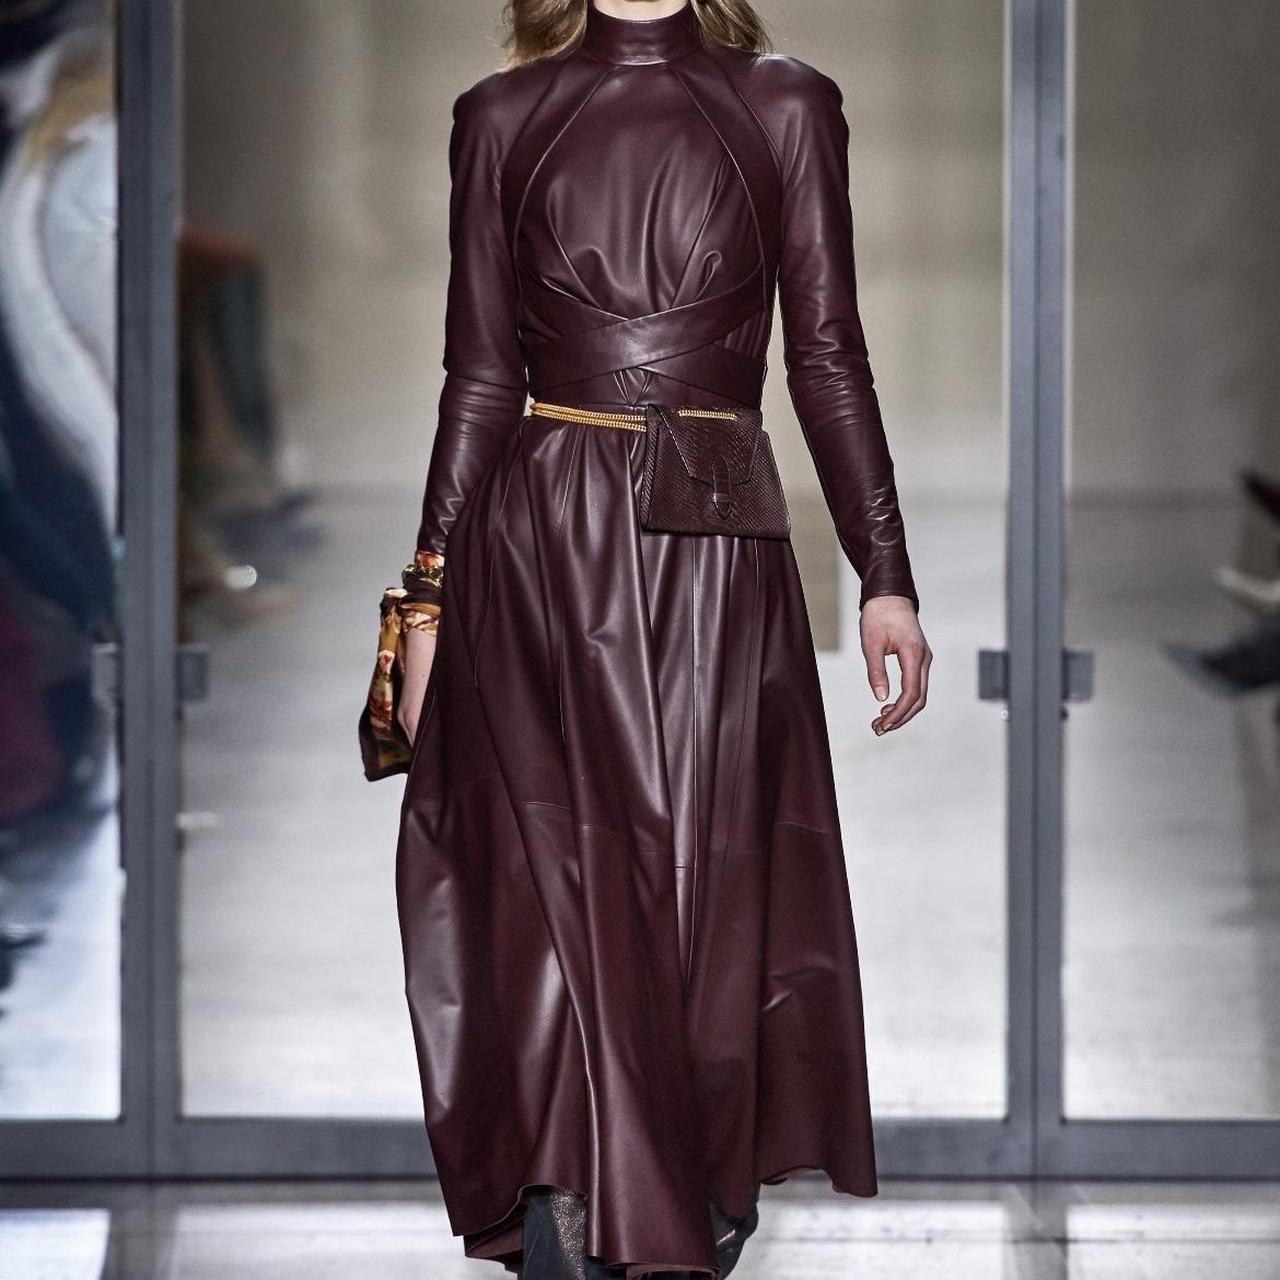 Zimmermann F19 leather runway dress - sample real... - Depop